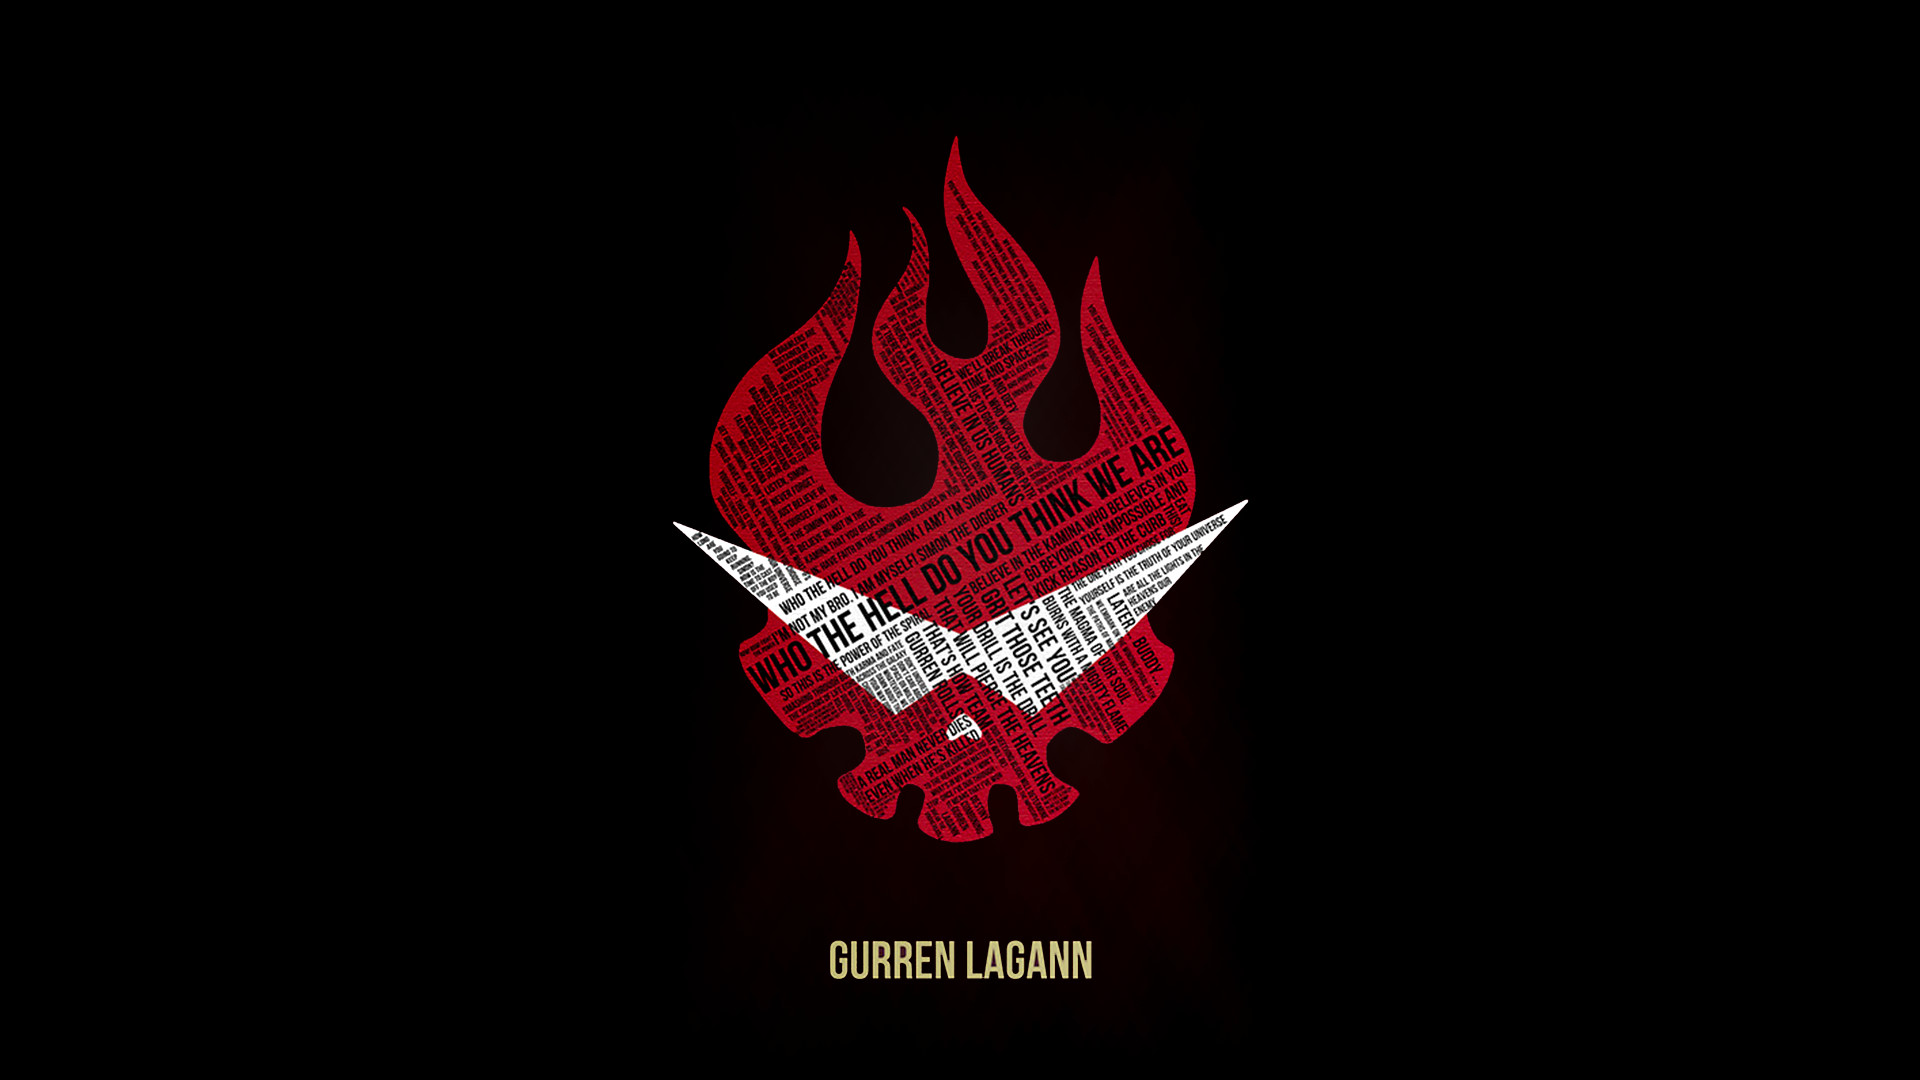 Gurren Lagann logo. Resize of something i found